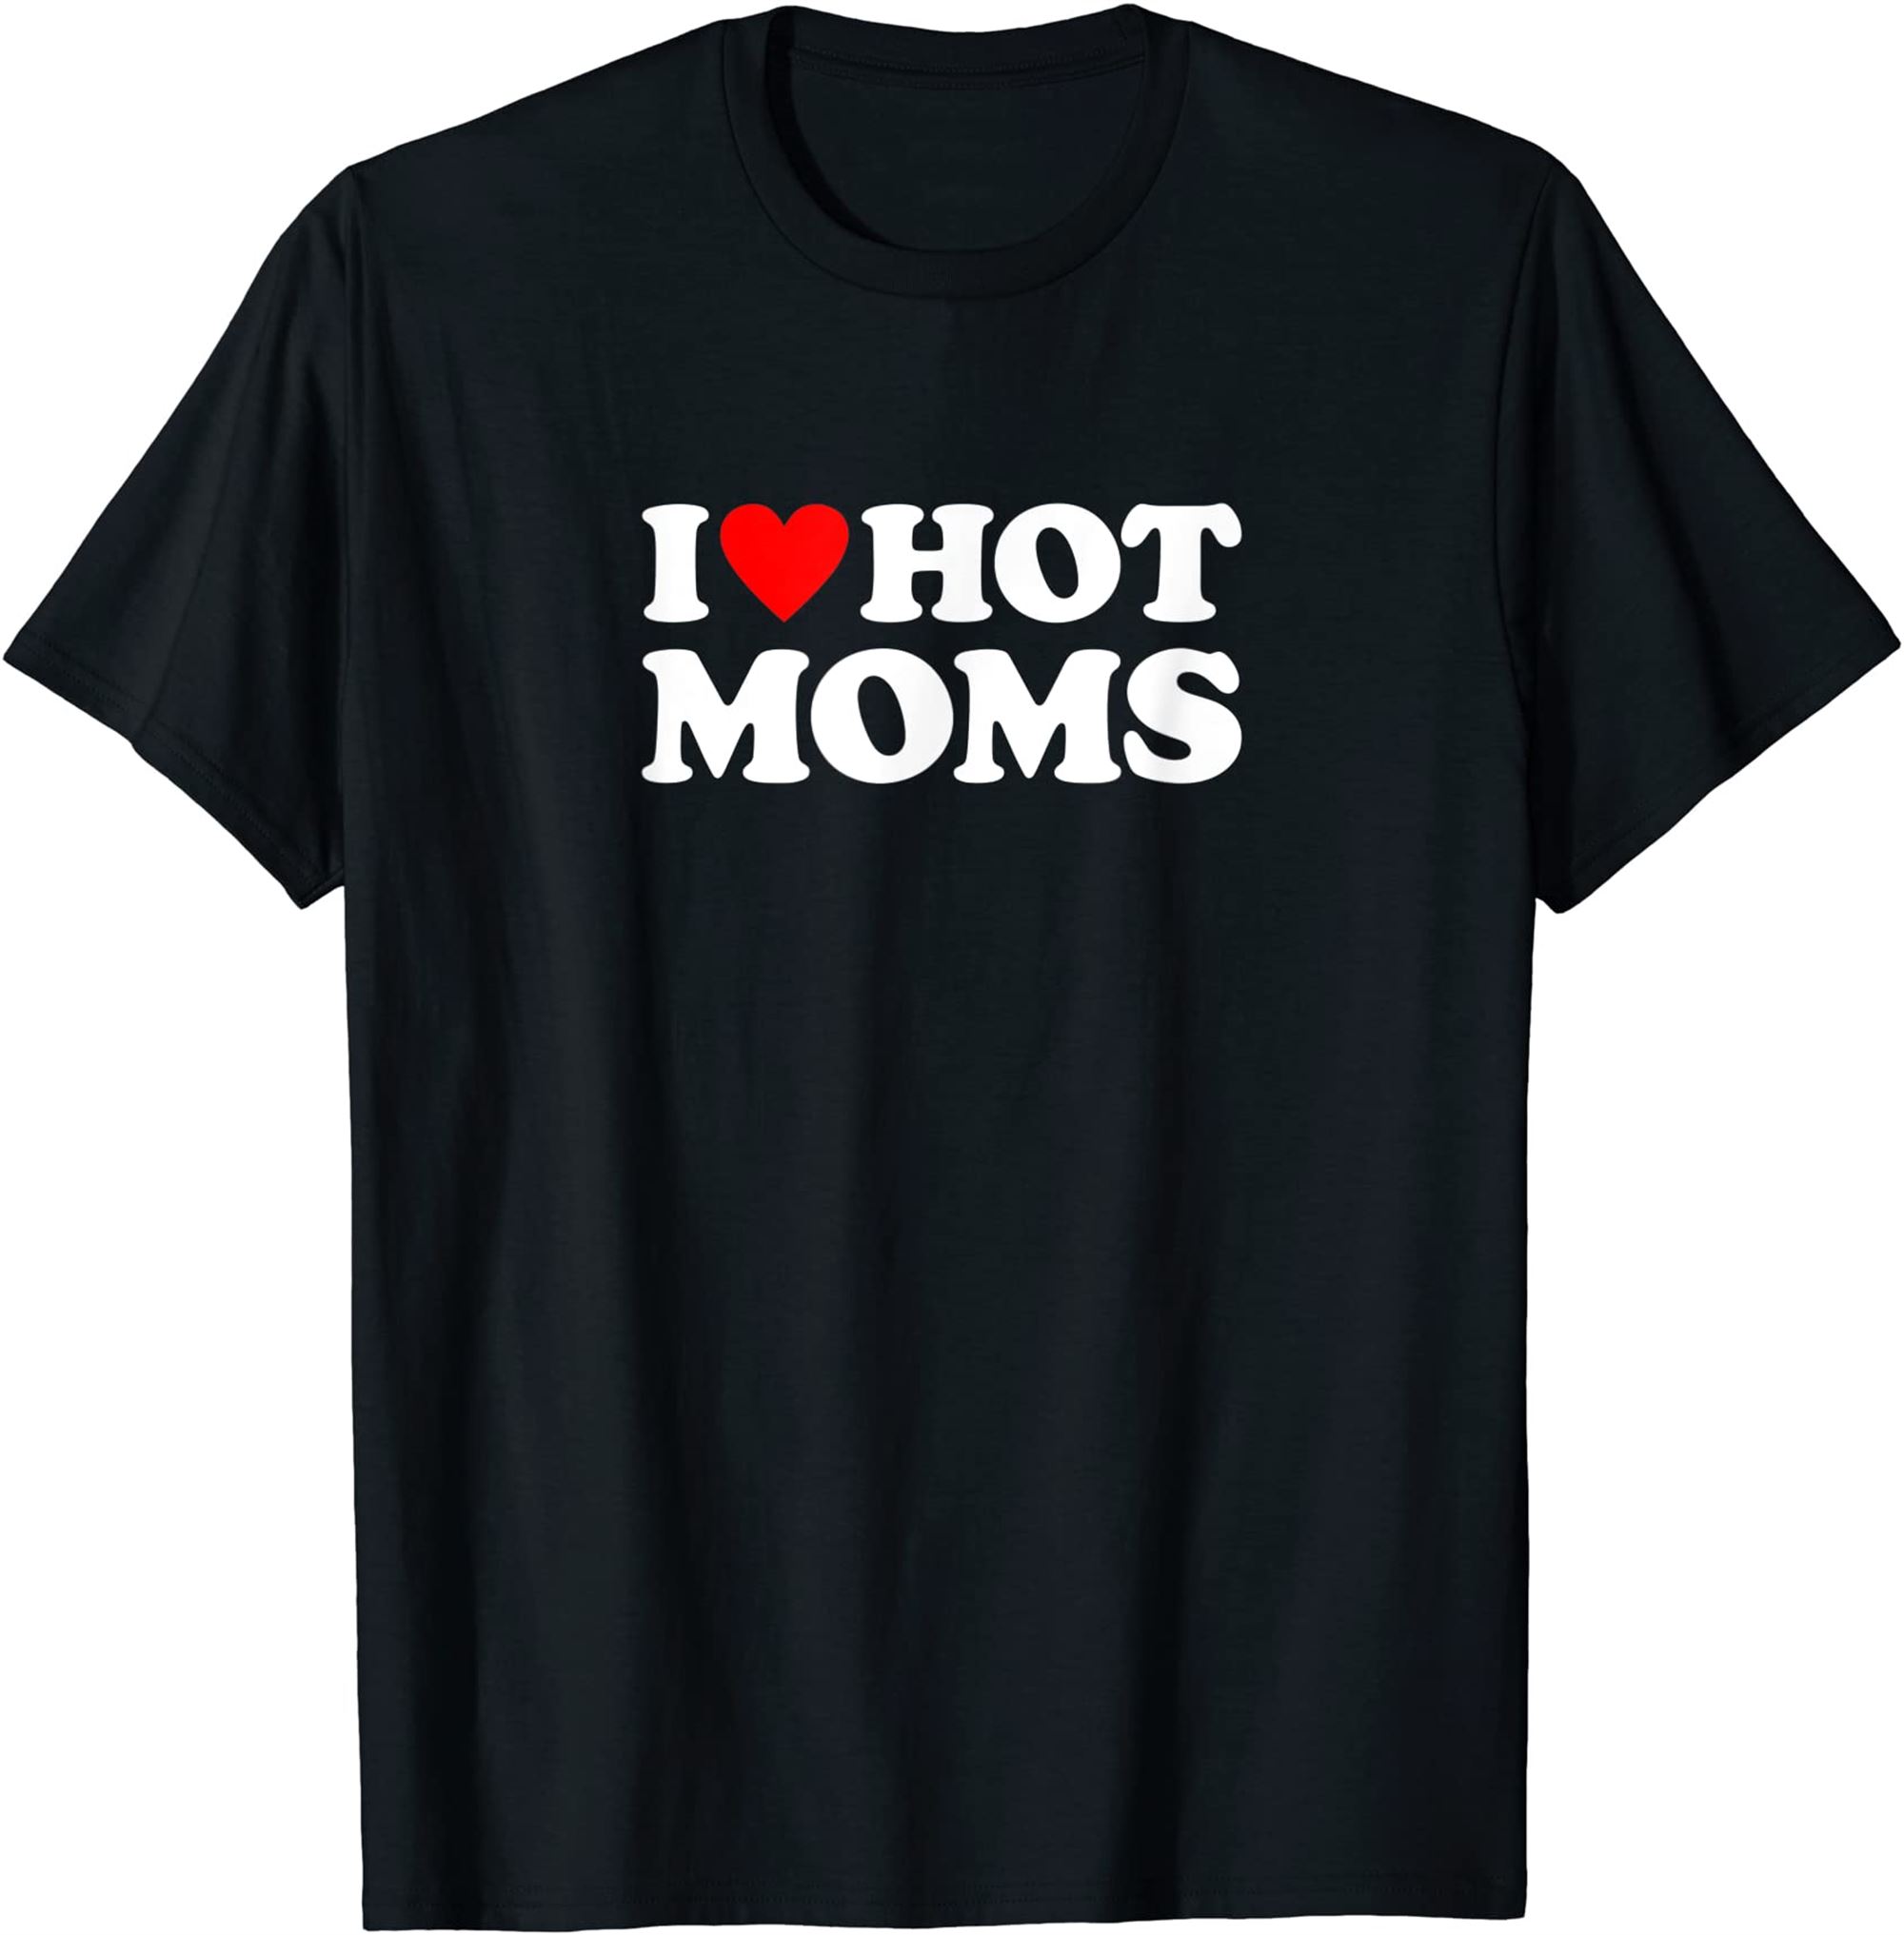 I Love Hot Moms Shirt I Heart Hot Moms Shirt I Love Hot Moms T-shirt Plus Size Up To 5xl